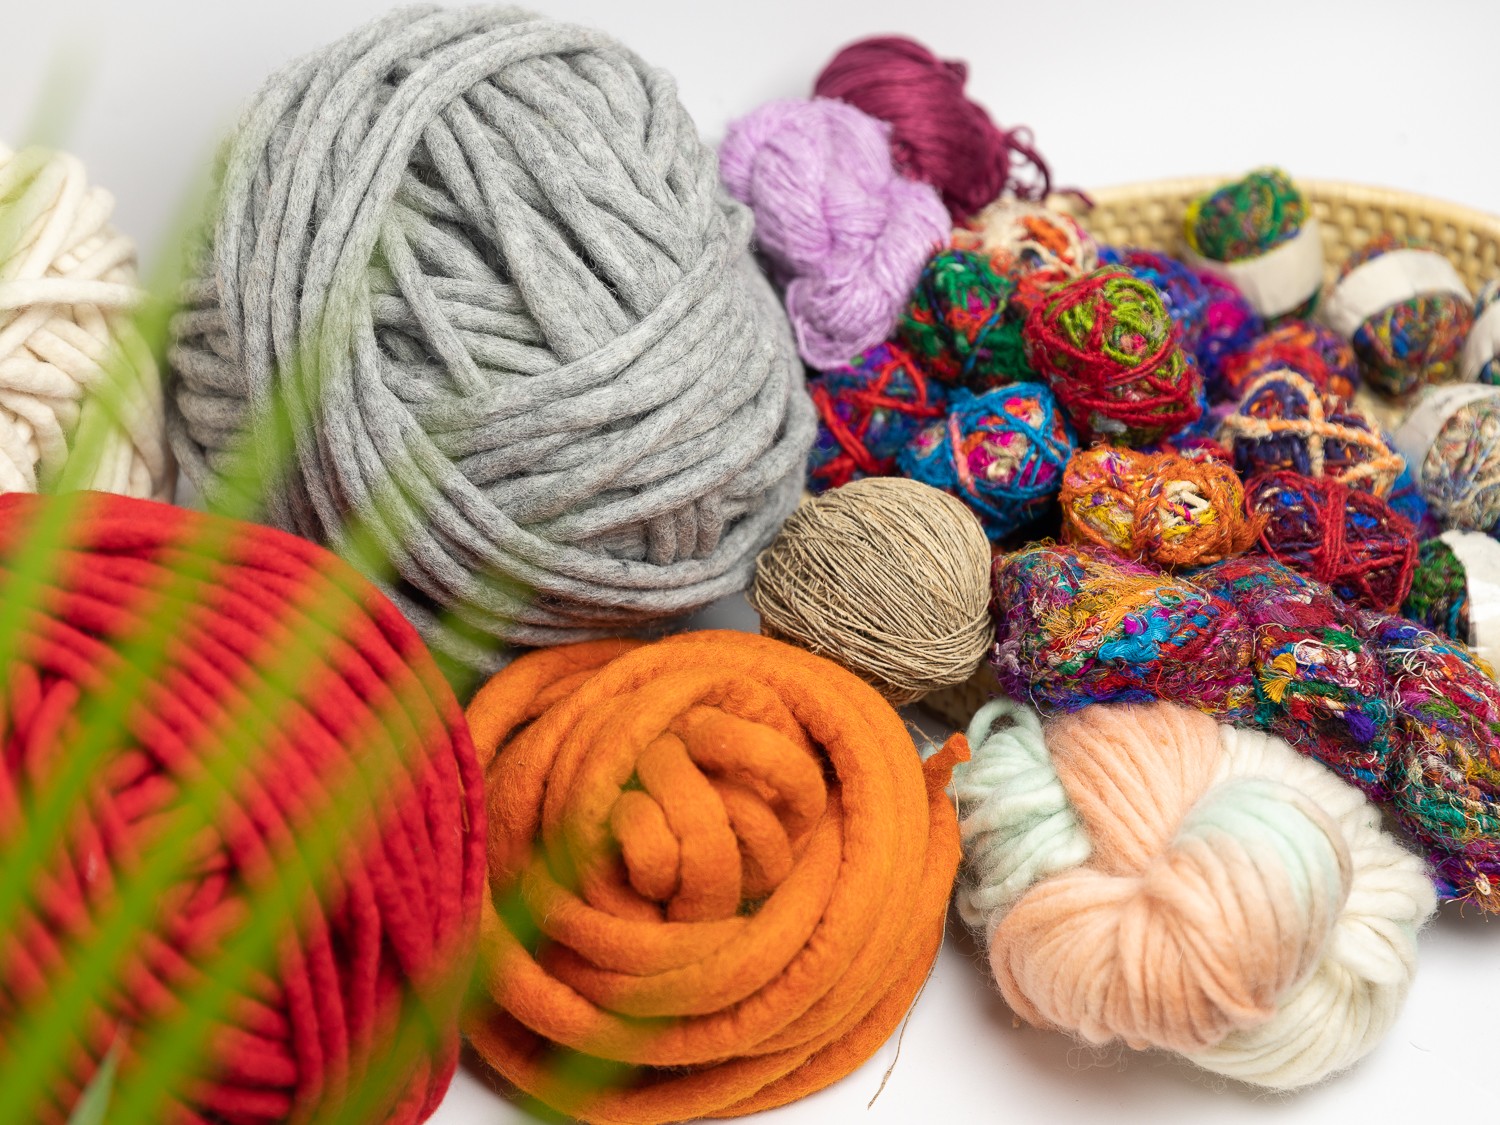 Mix Color Pure Wool Soft Yarns from Nepal - Felt & Yarn